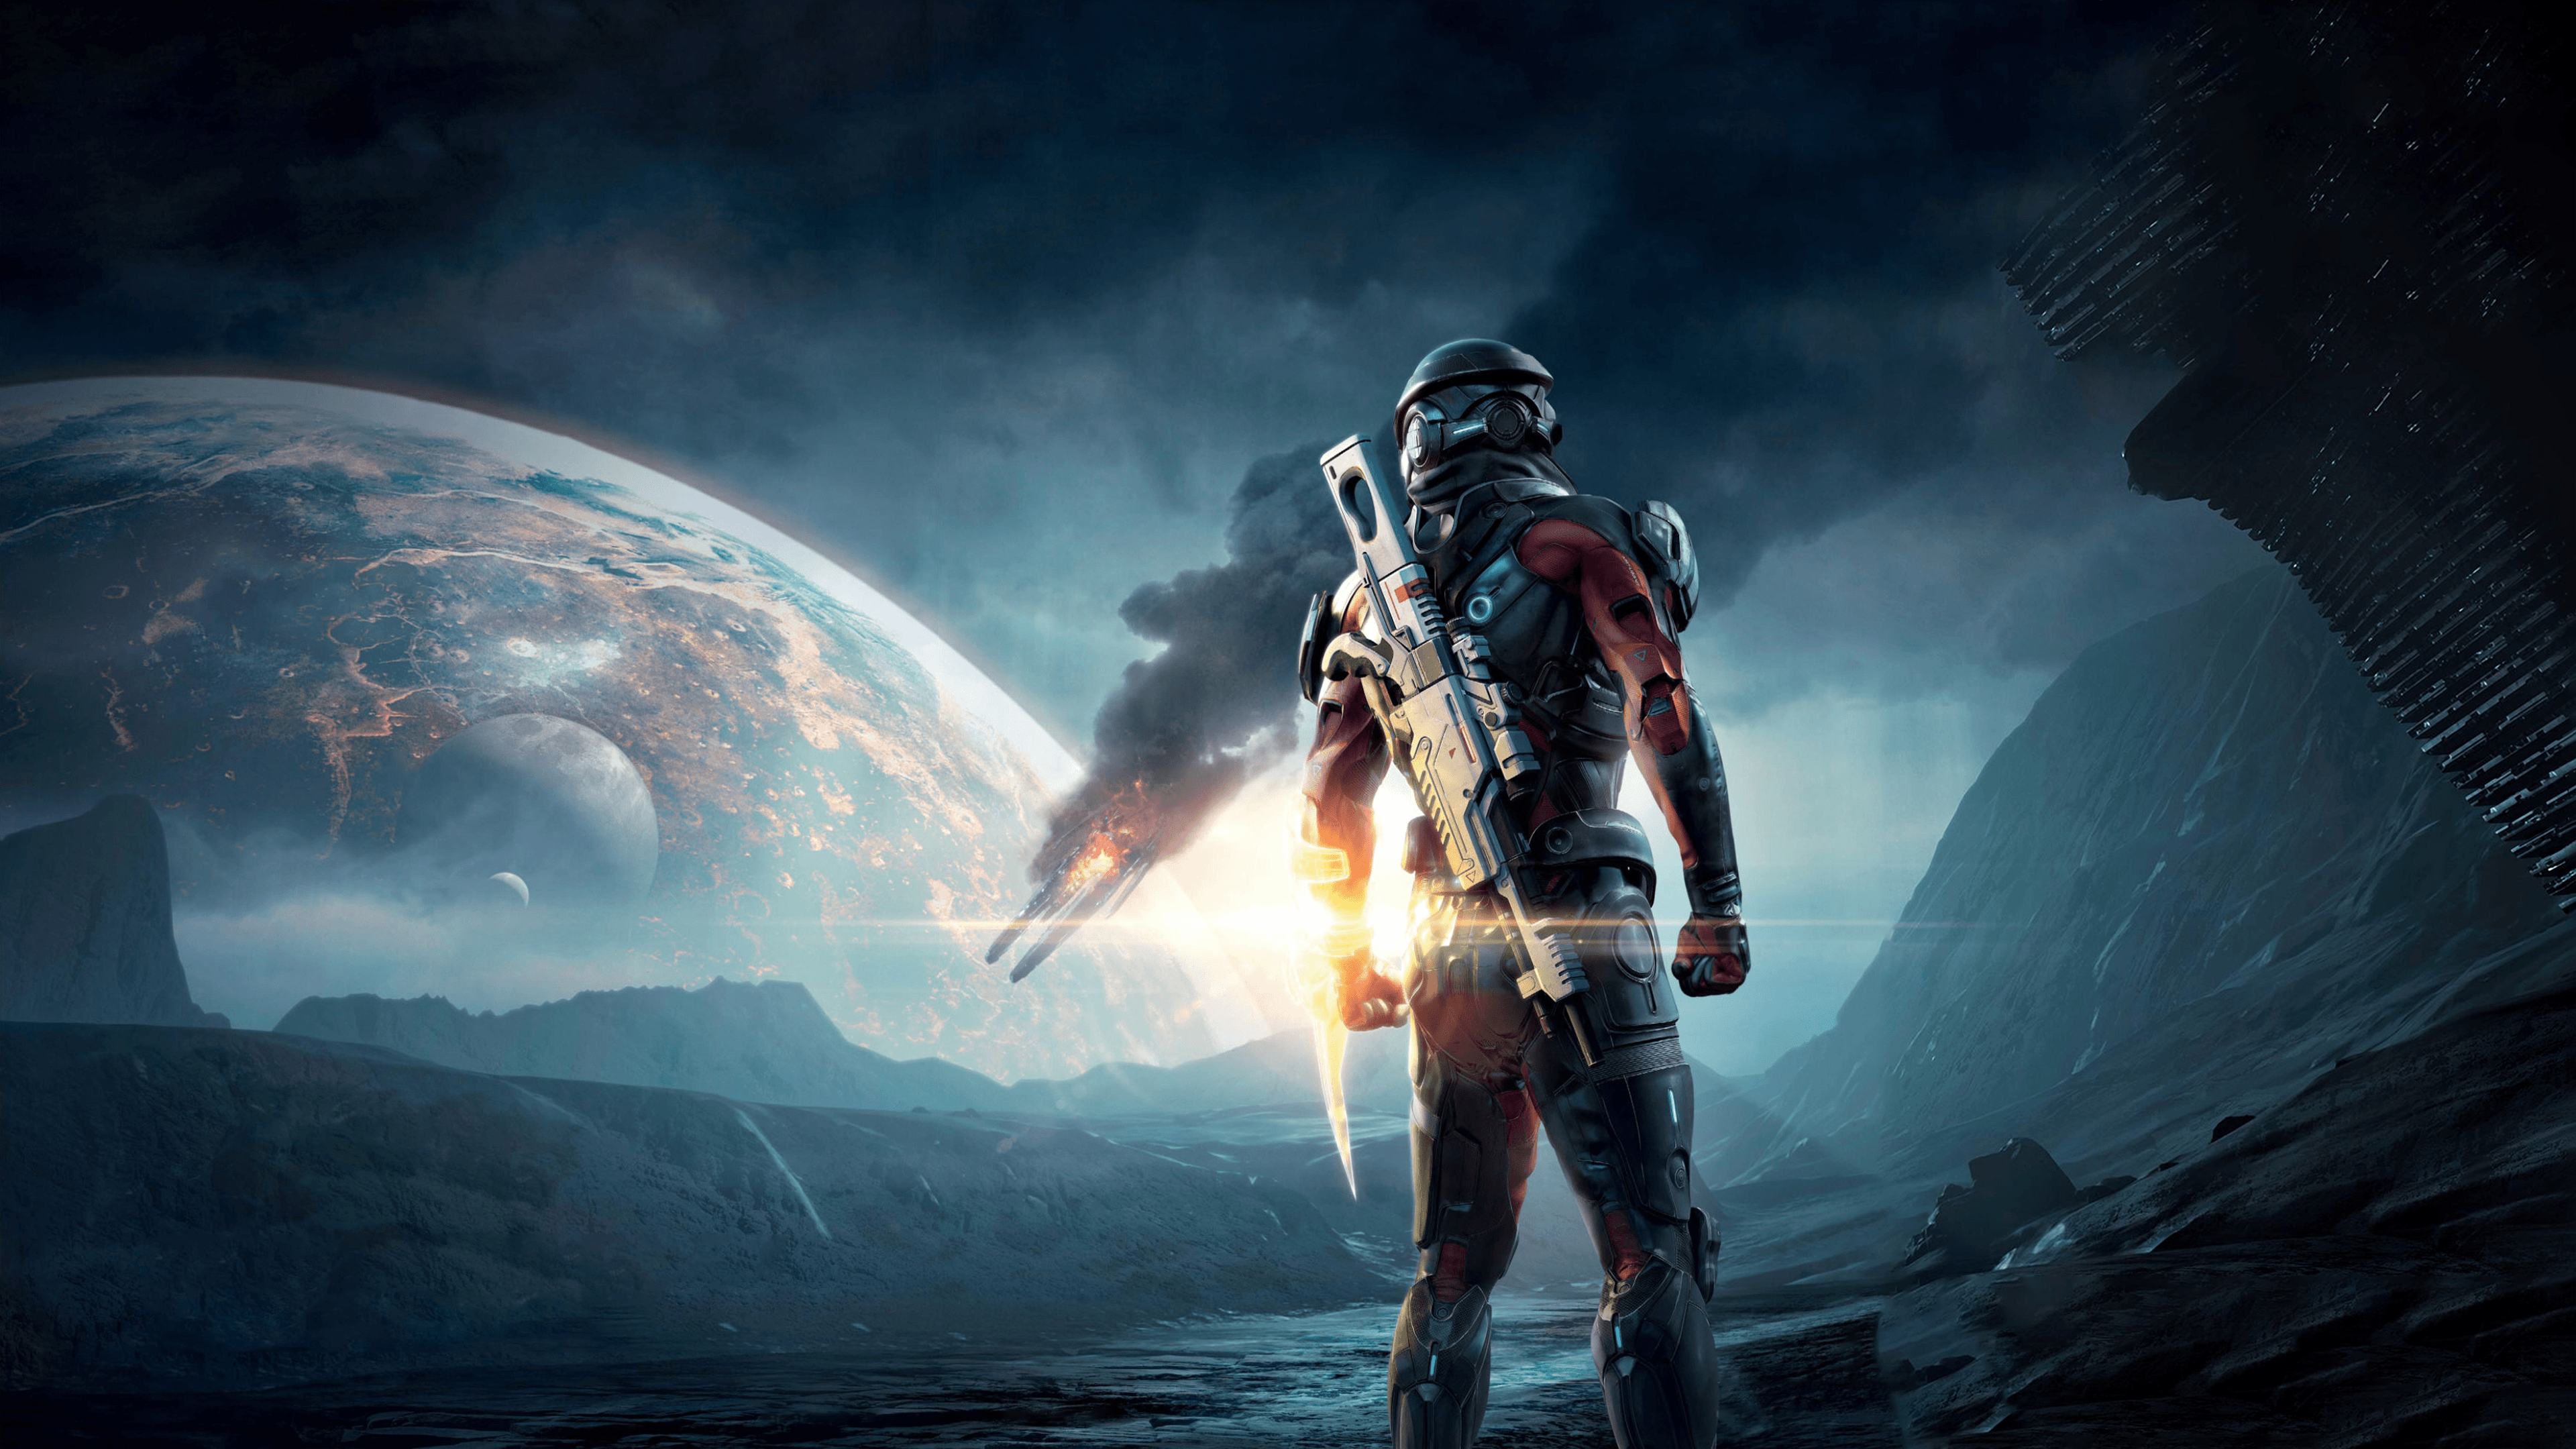 Mass Effect: Andromeda HD Wallpaper. Background